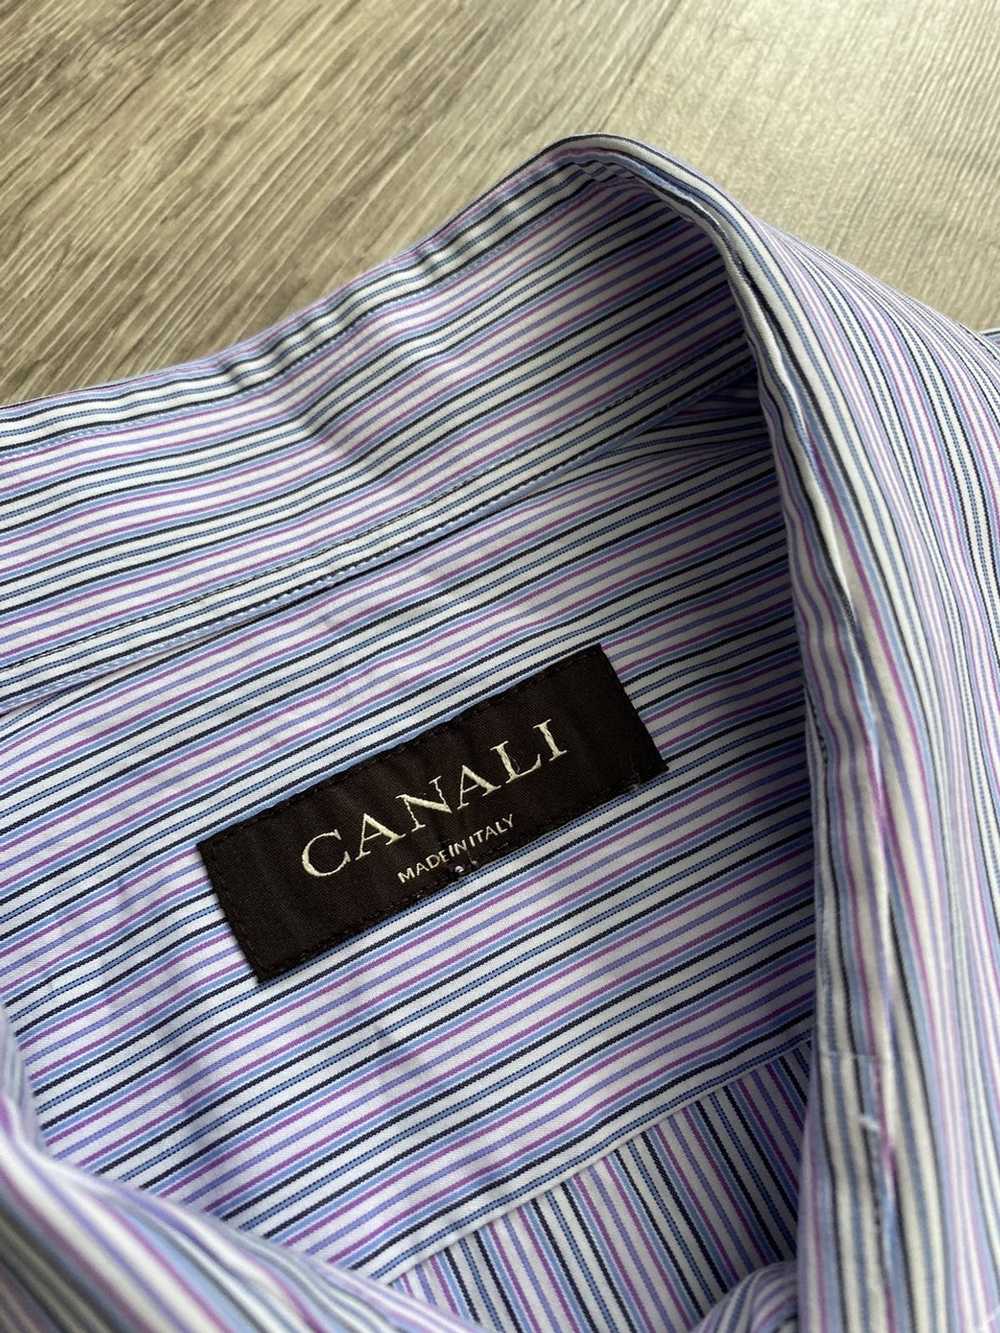 Canali Men’s Canali Long Sleeve Dress Shirt size … - image 3